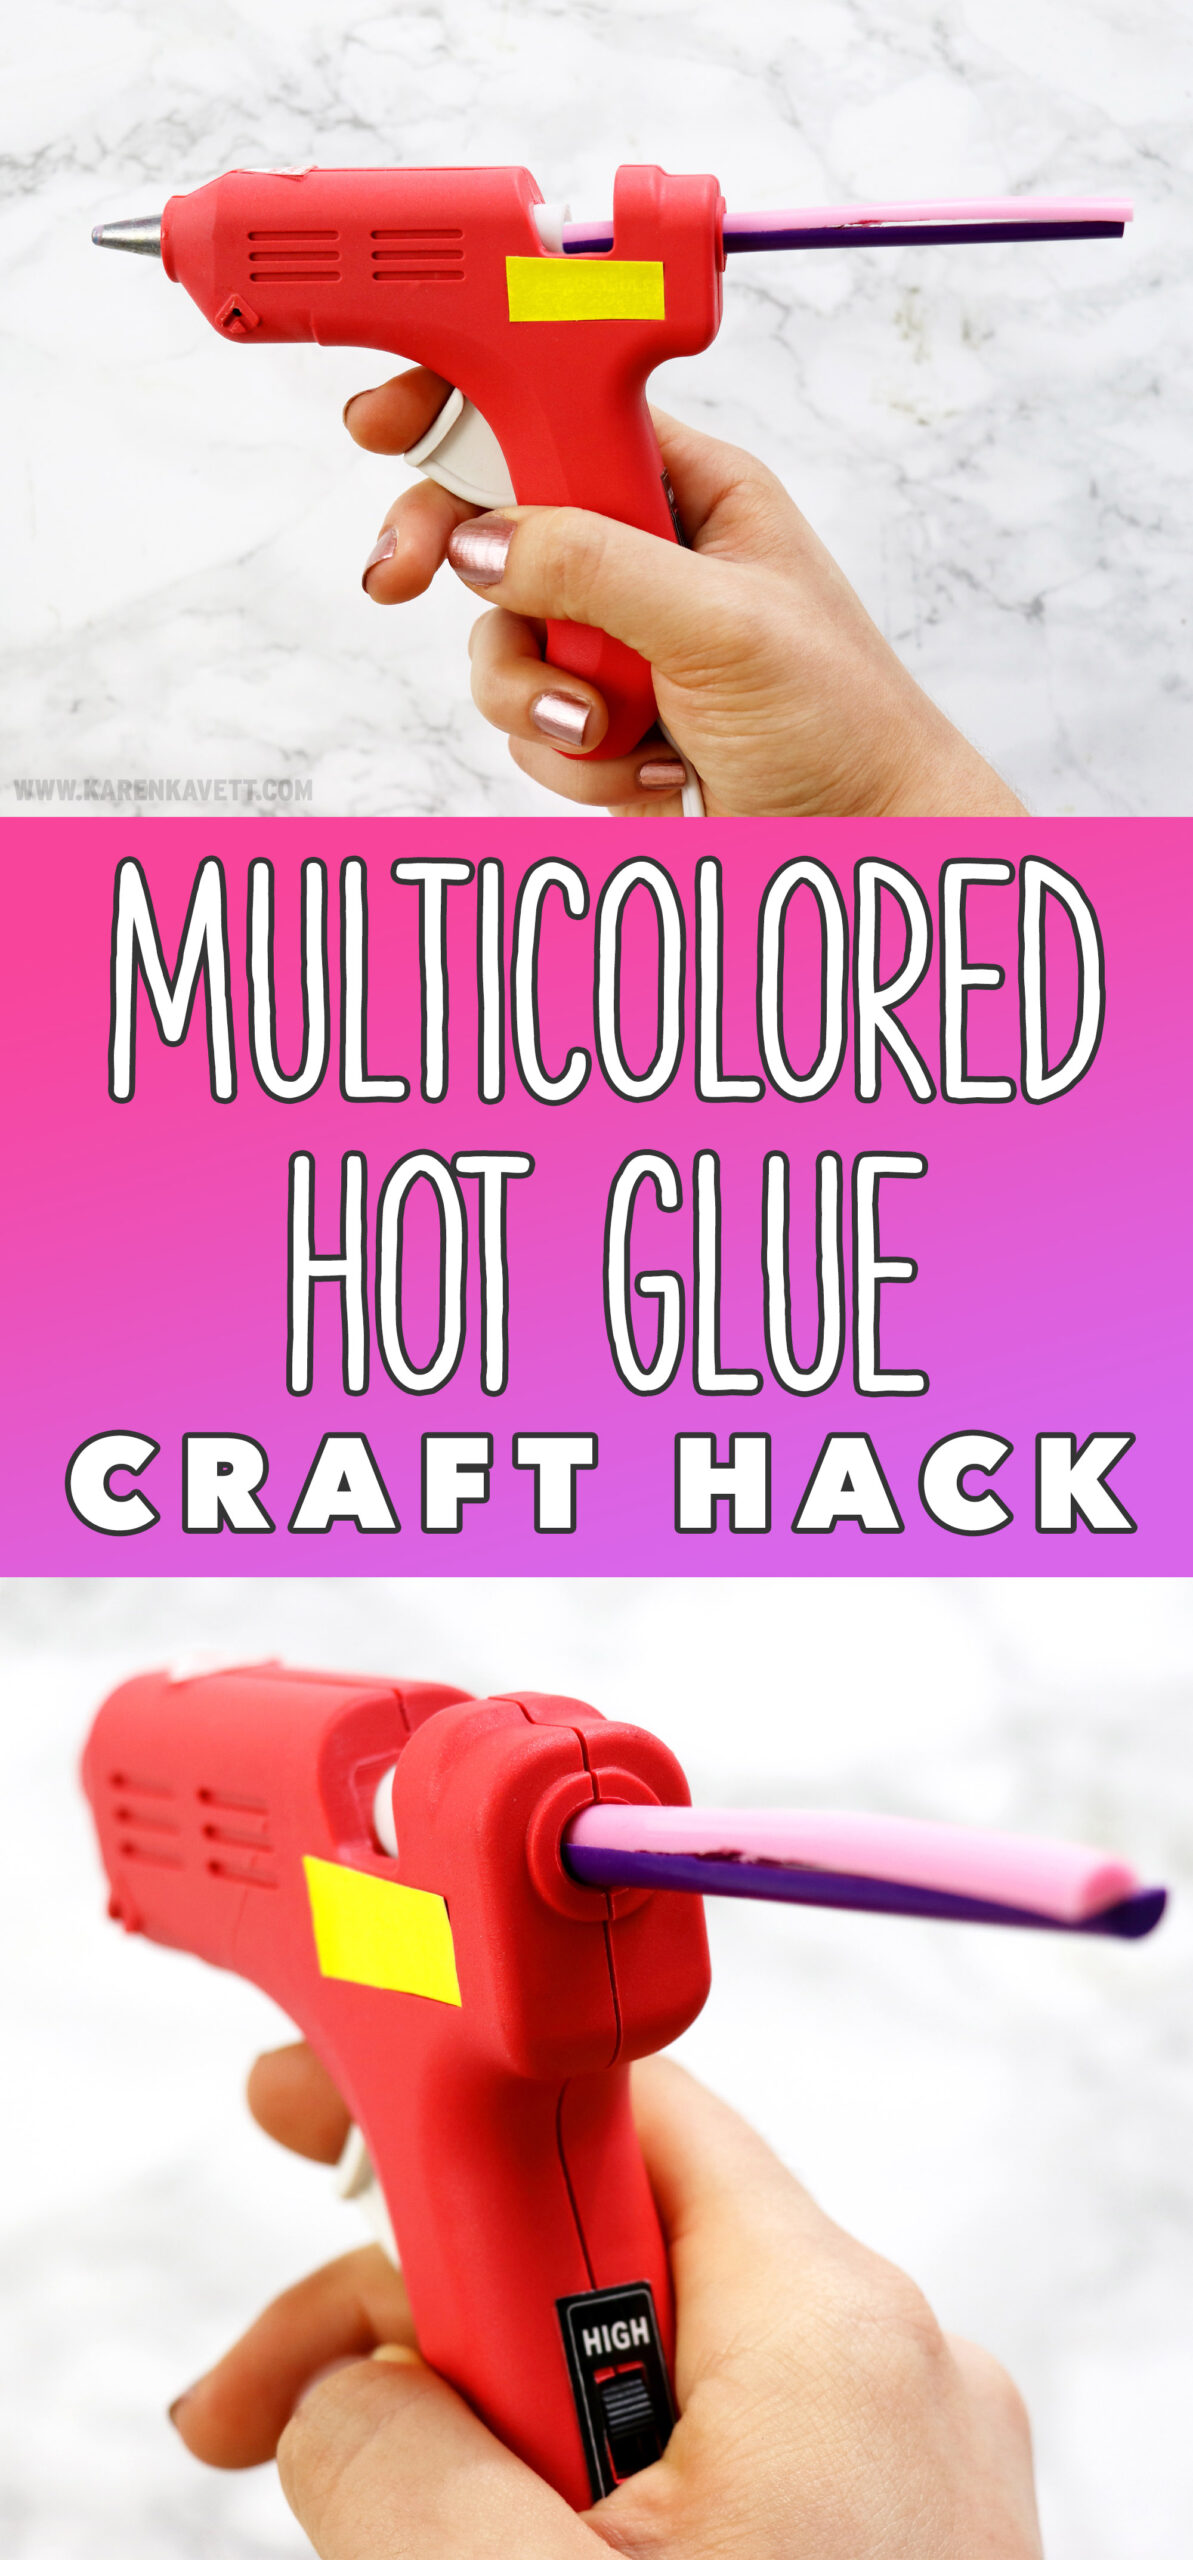 33 Super Fun Glue Gun Crafts - DIY Projects for Teens